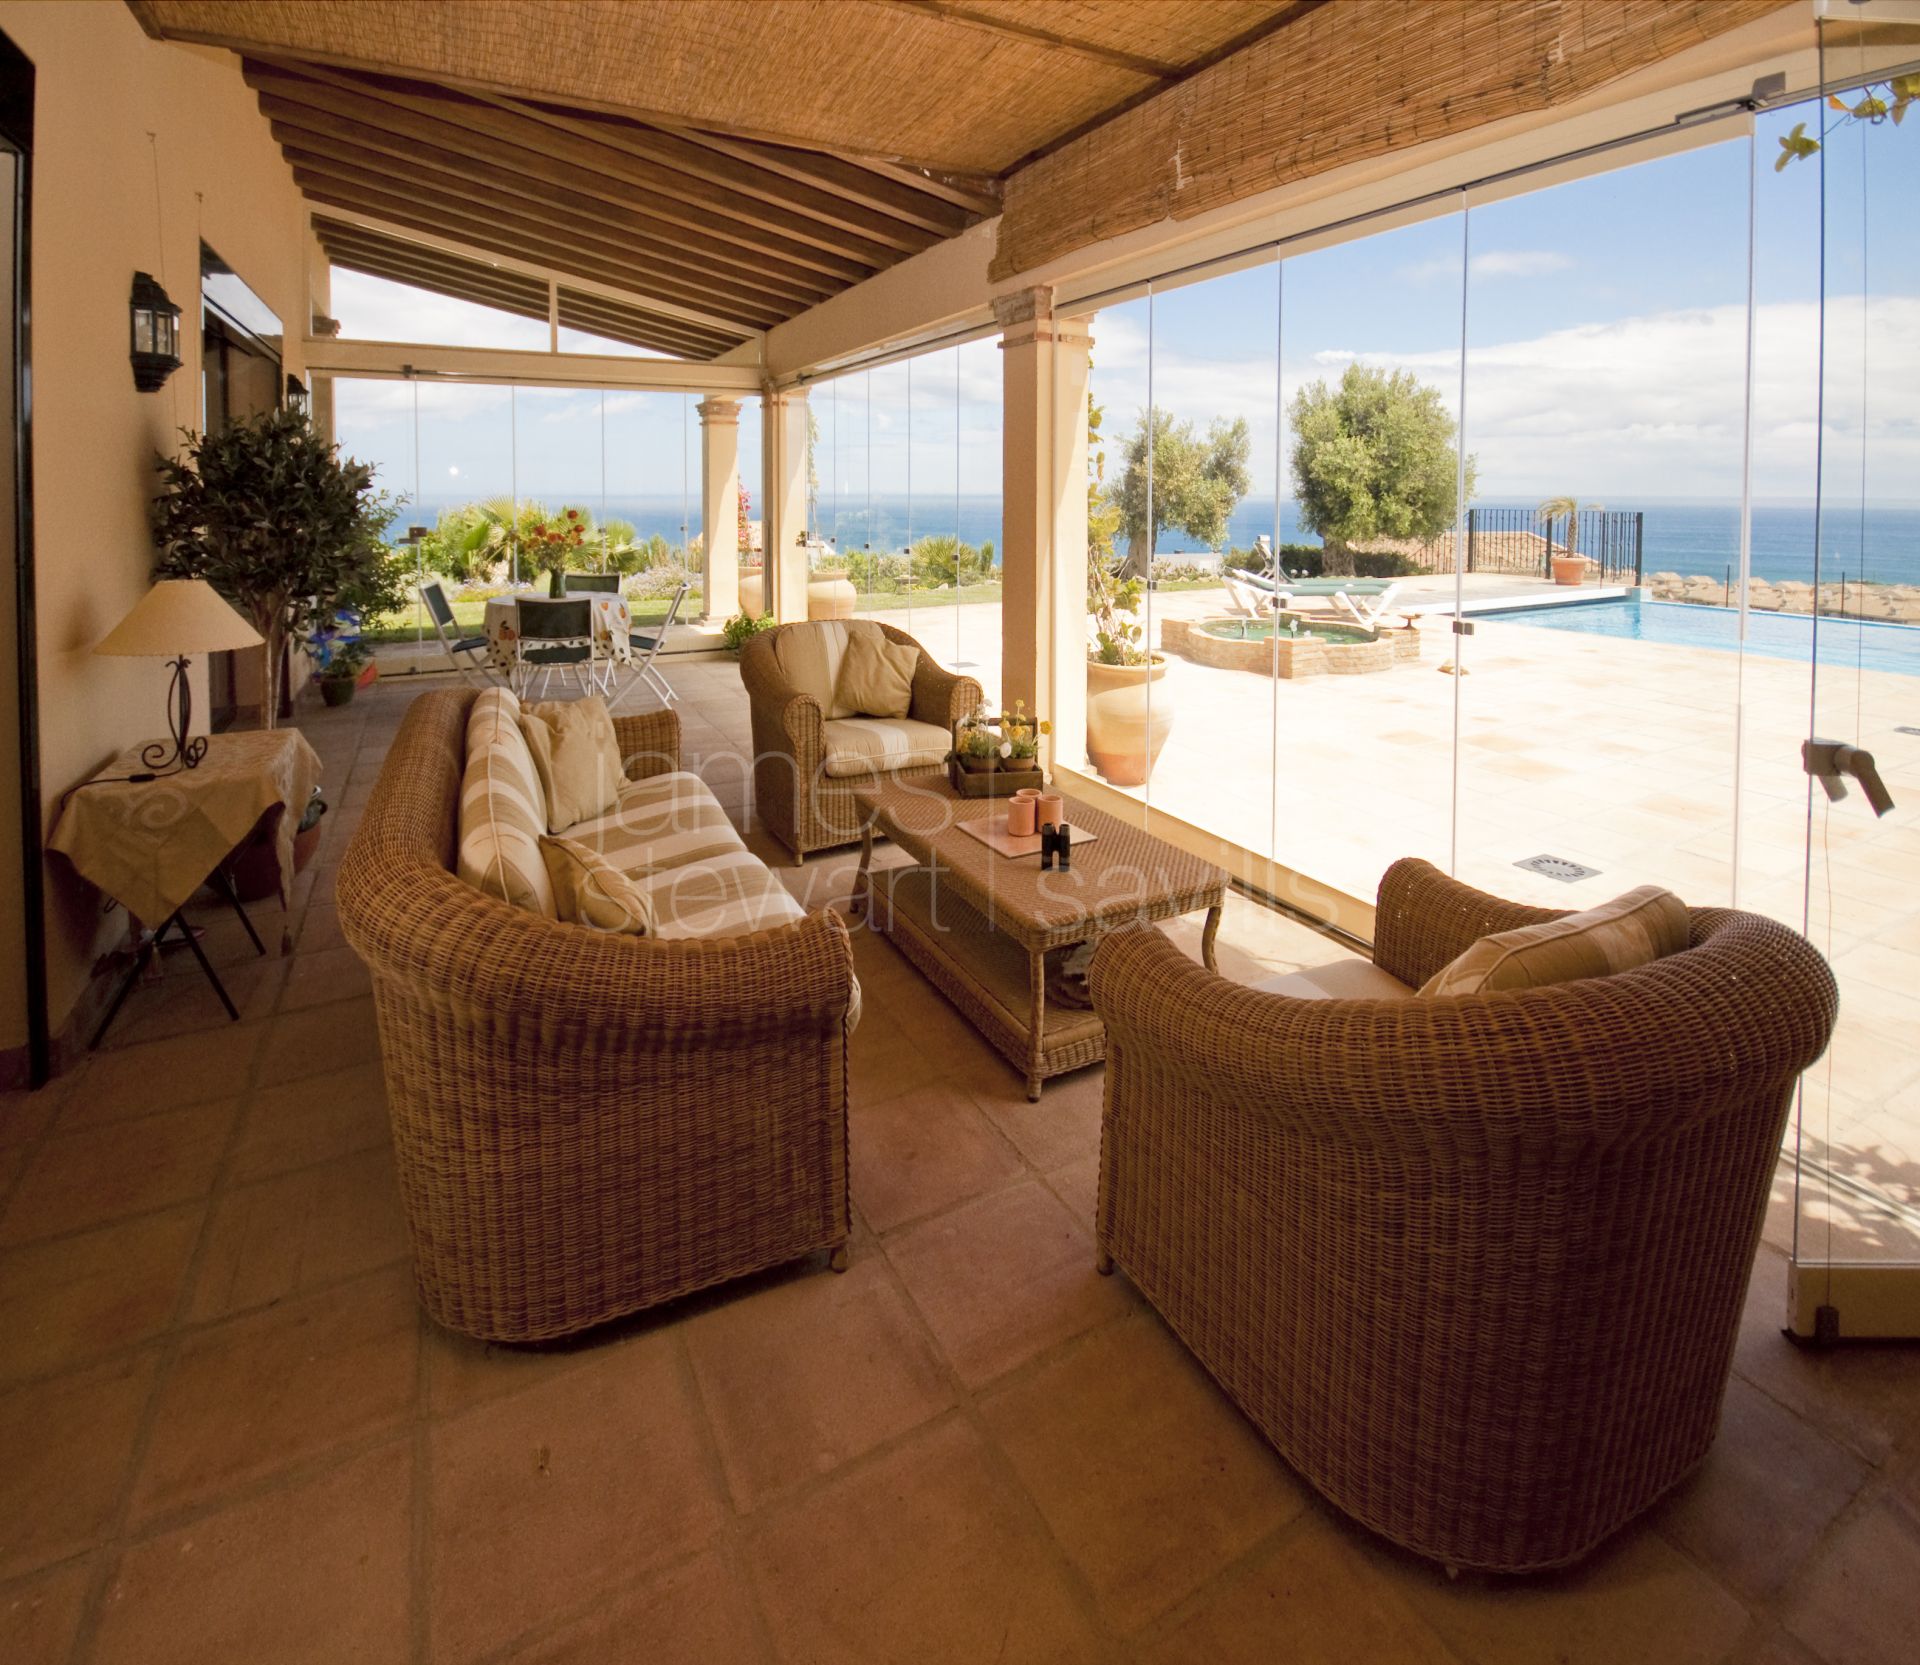 Fantástica villa con estilo andaluz e impresionantes vistas al mar mediterráneo